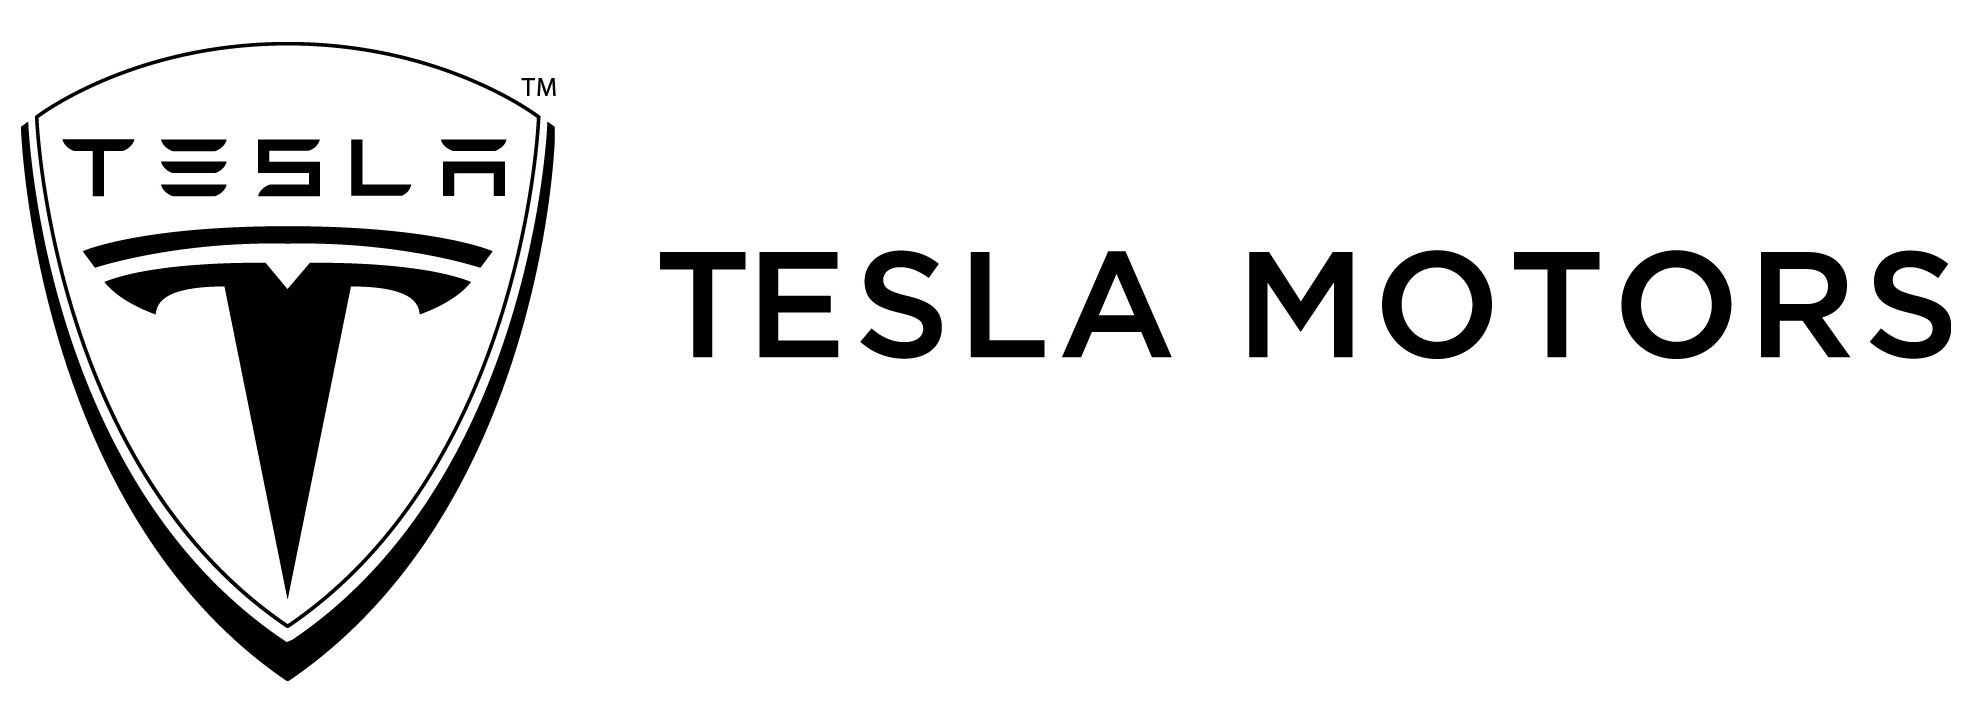 Tesla shares surge